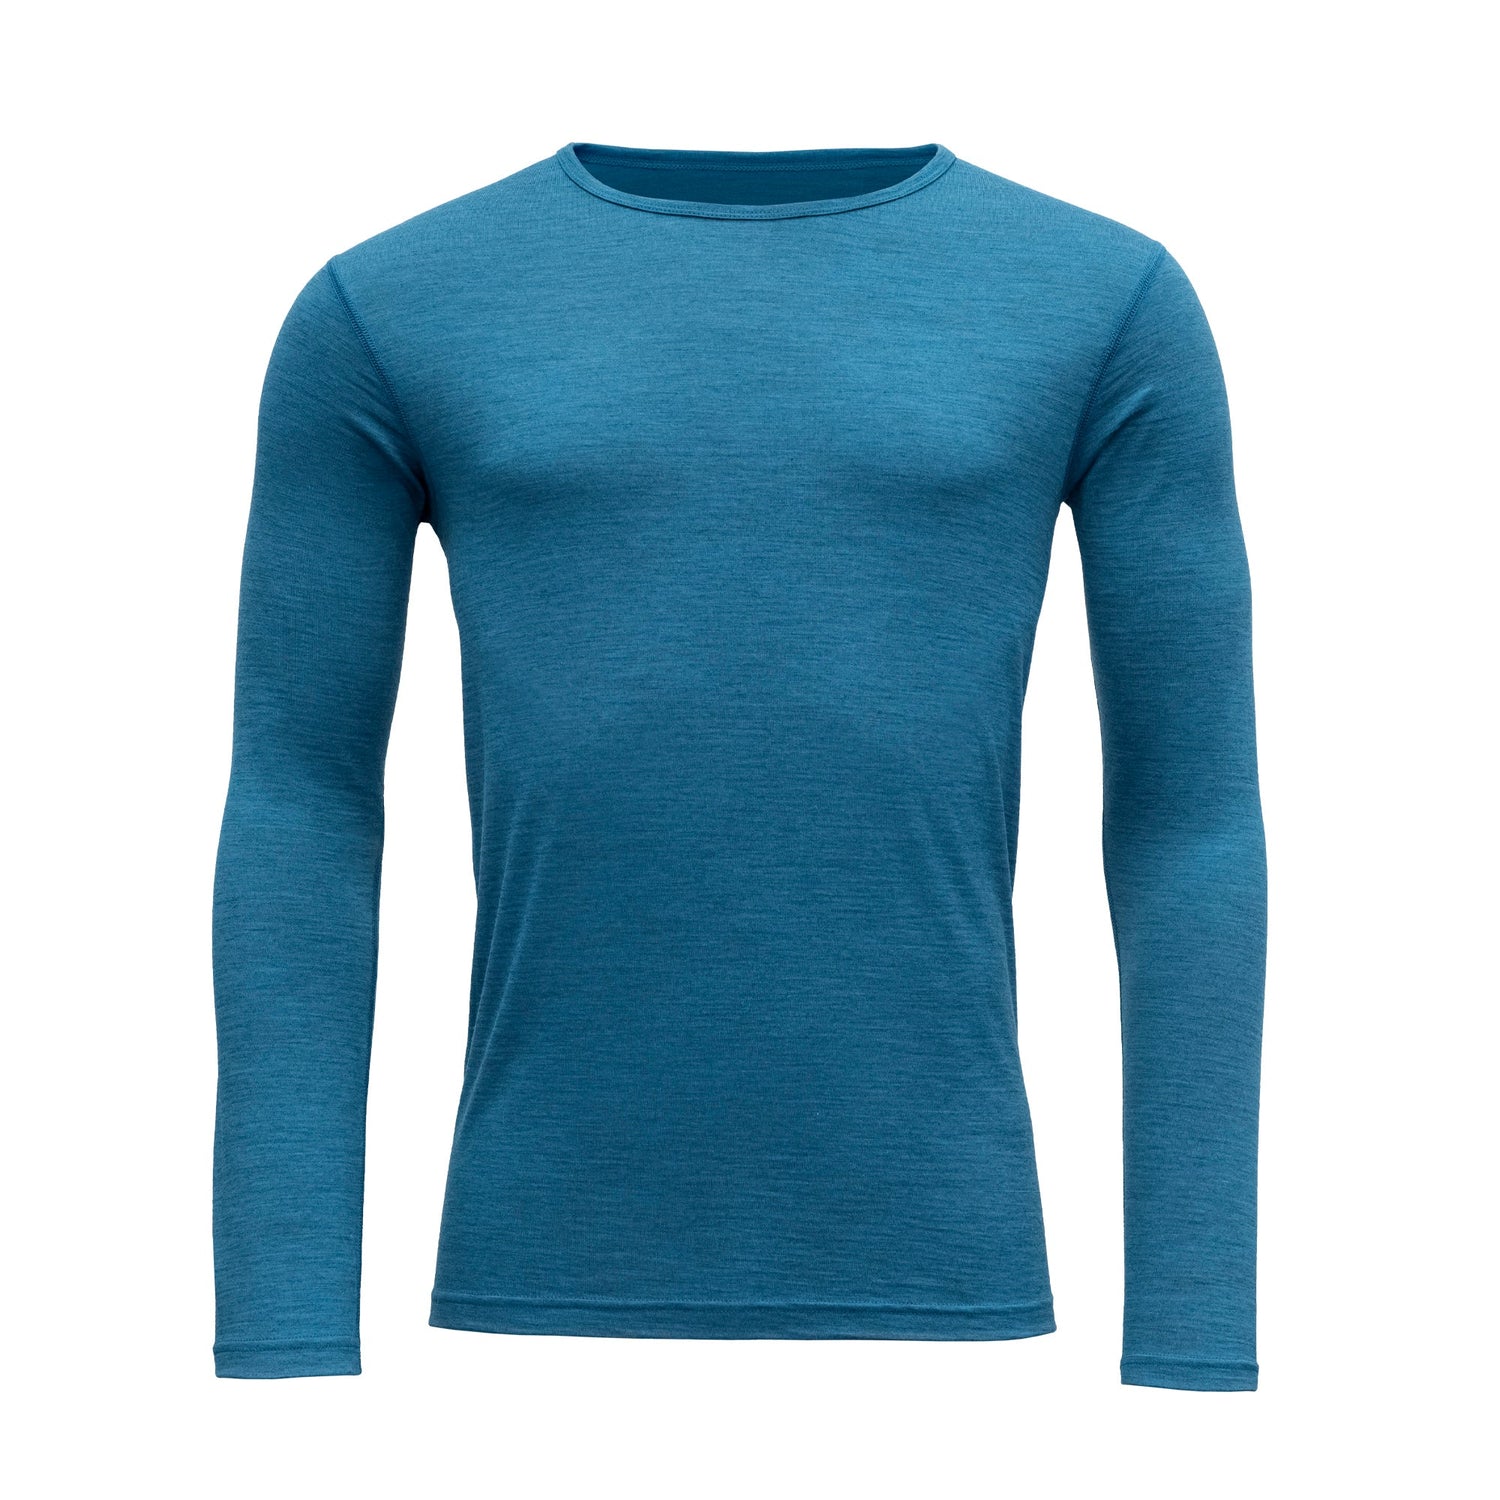 Devold M's Breeze Shirt - 100% Merino Wool Blue Melange Shirt